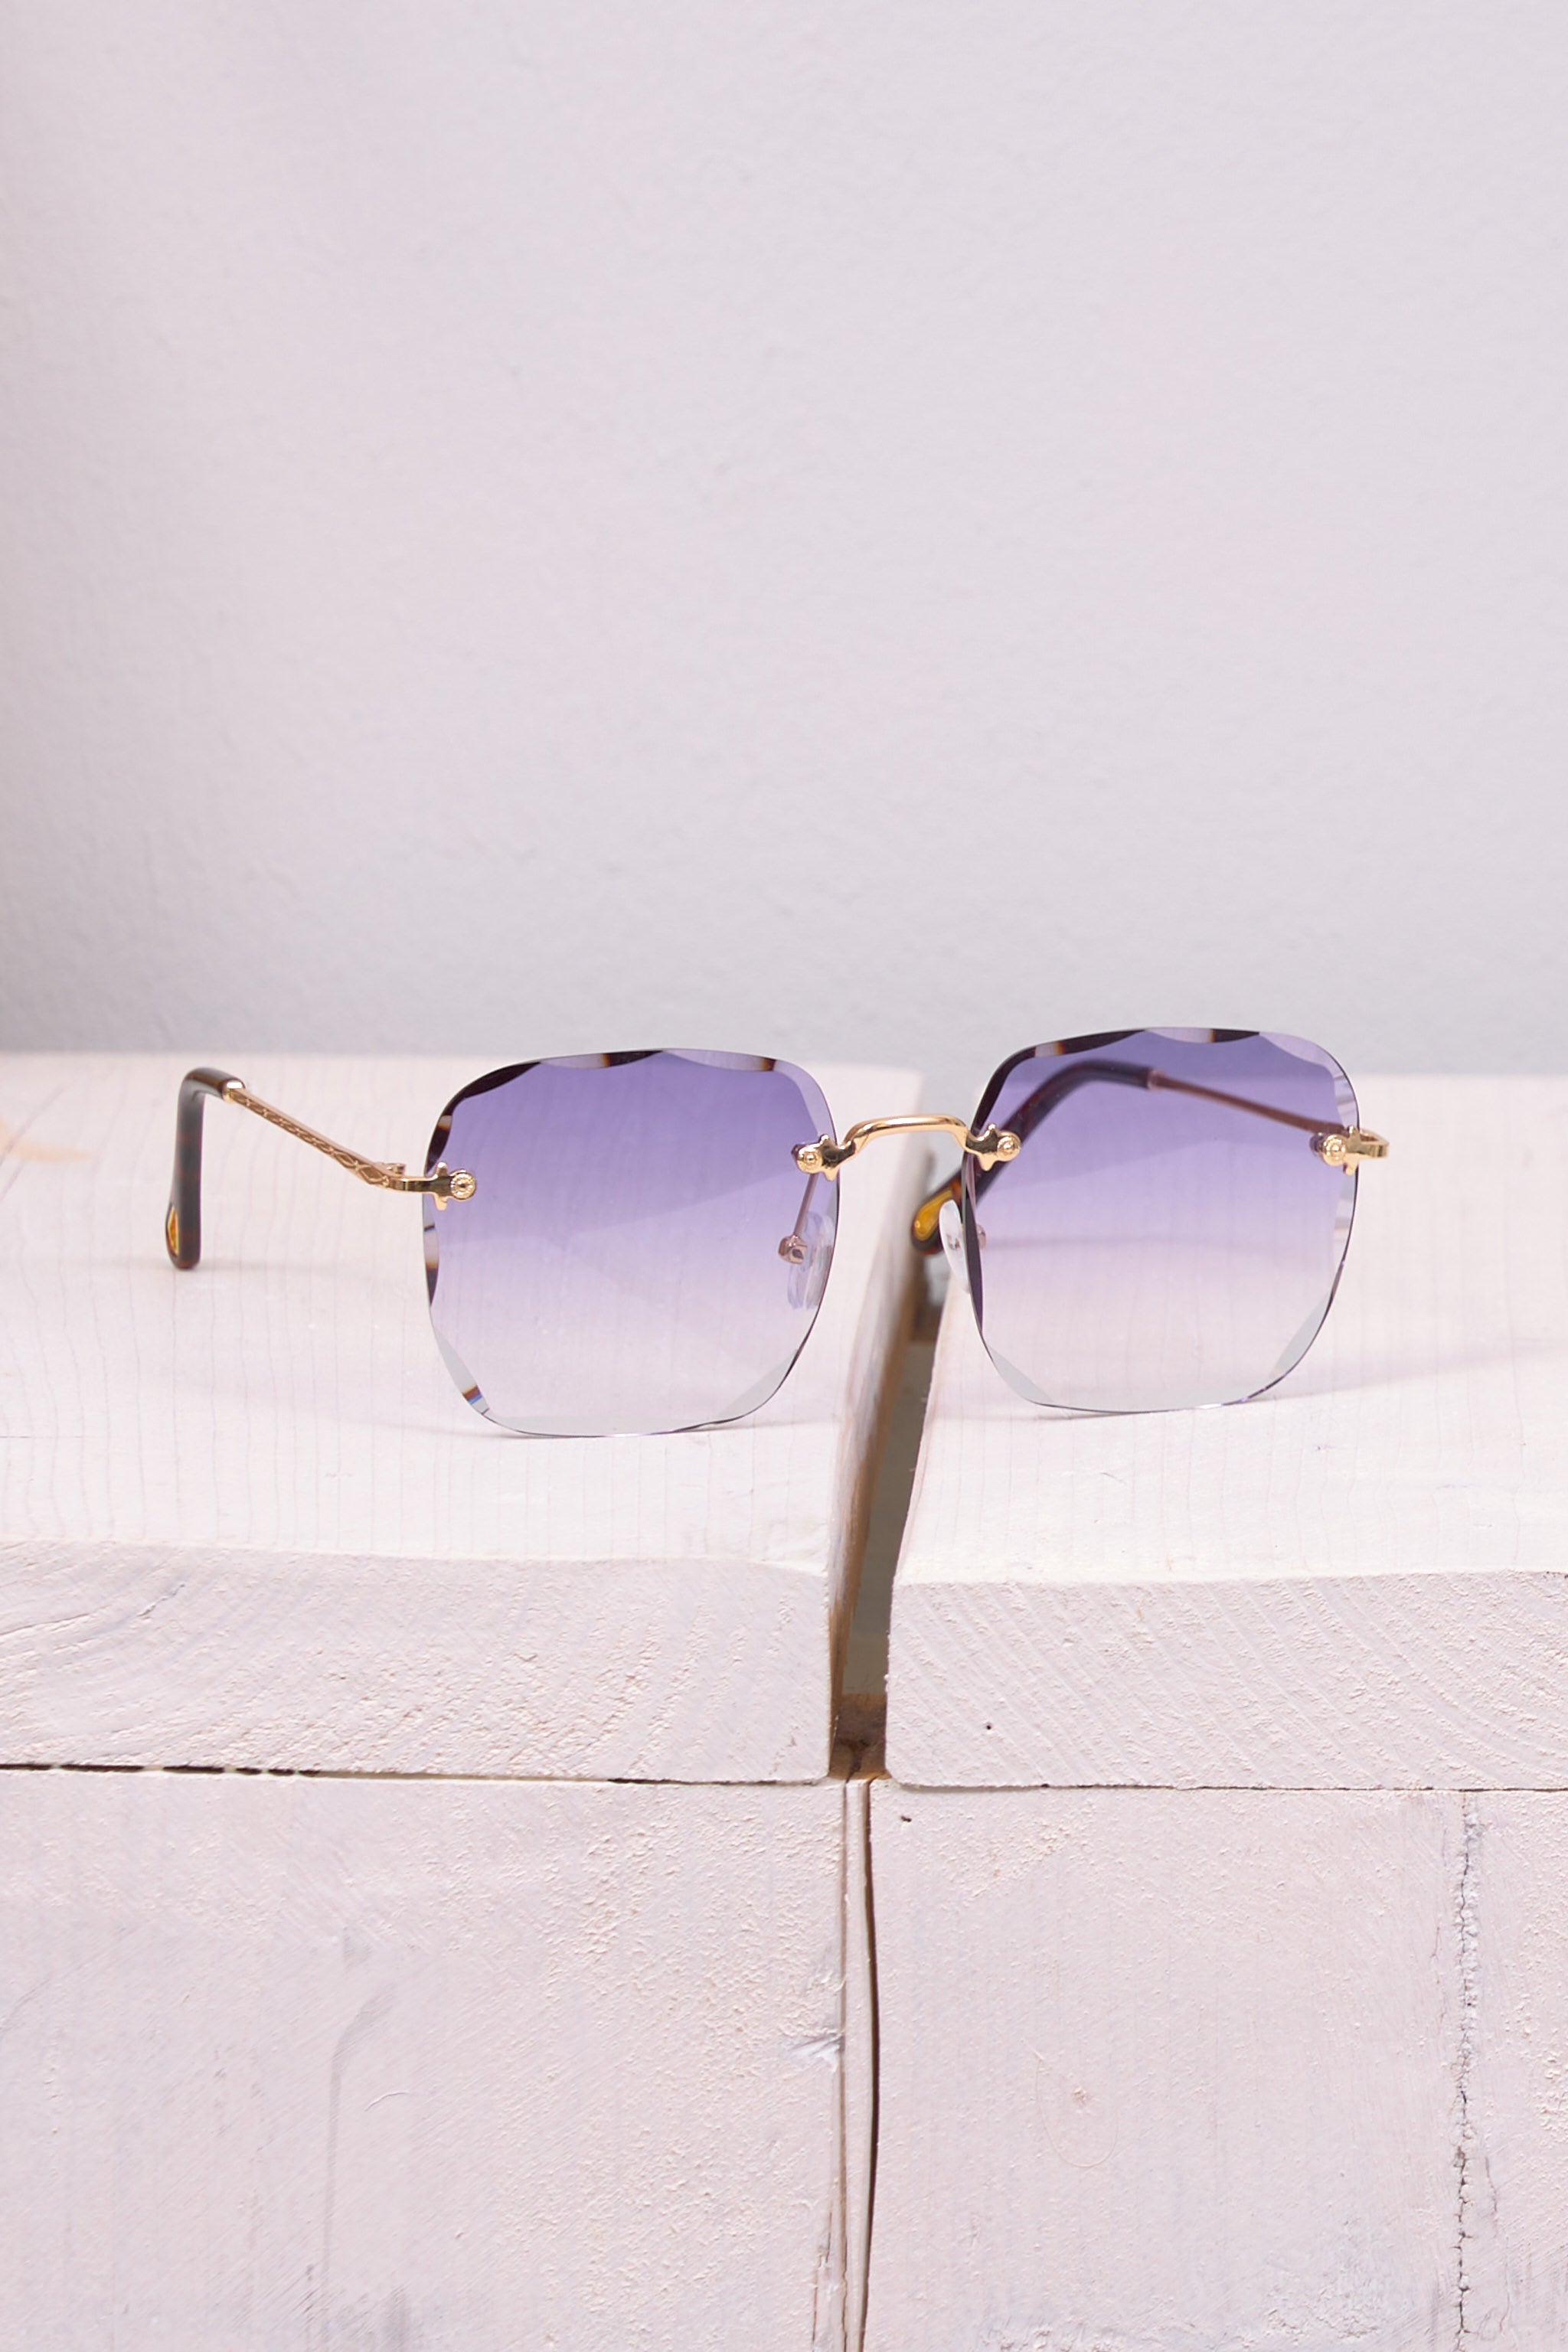 Square sunglasses, purple